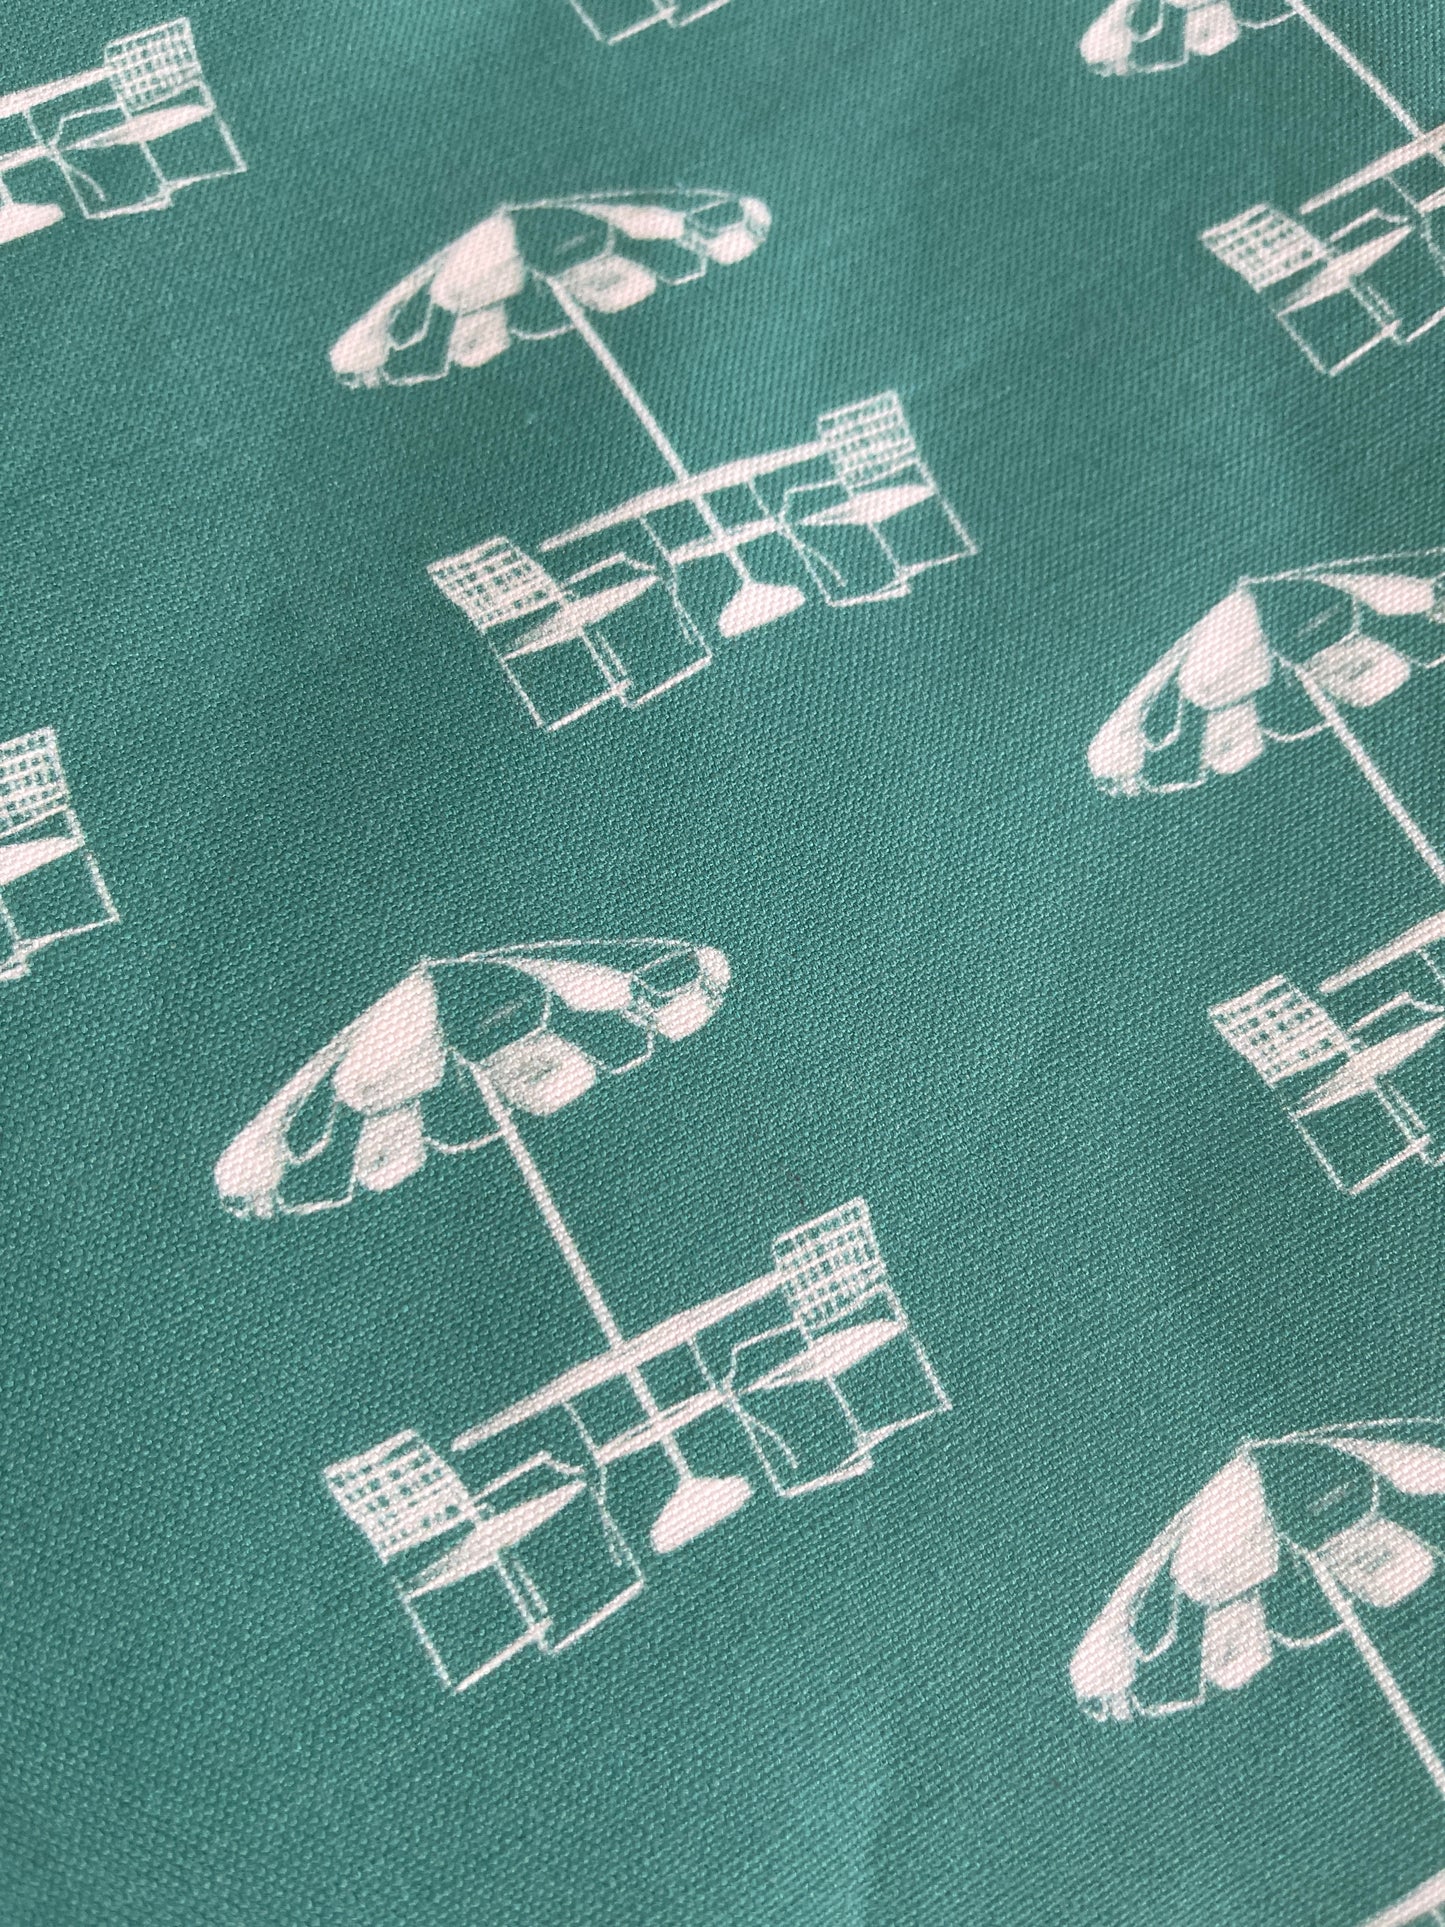 Sage Green and White Umbrella Fabric